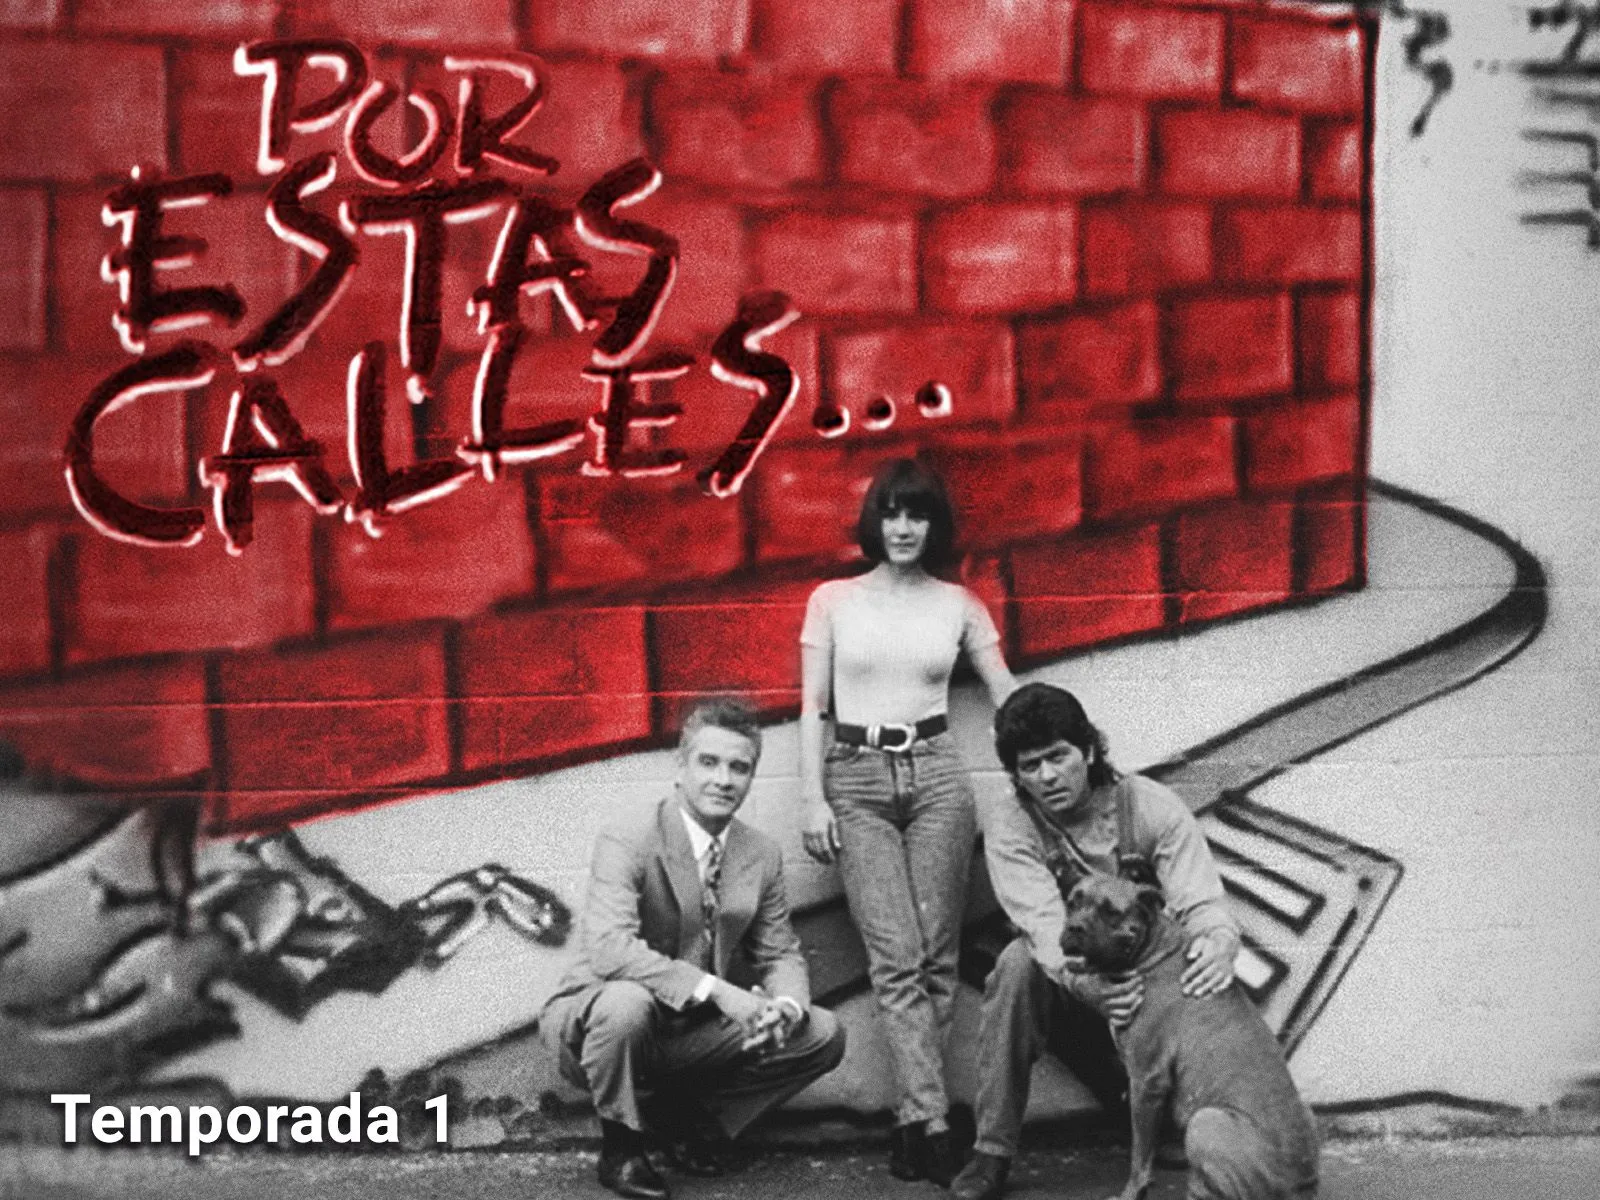 Prime Video: Por Estas Calles season-1